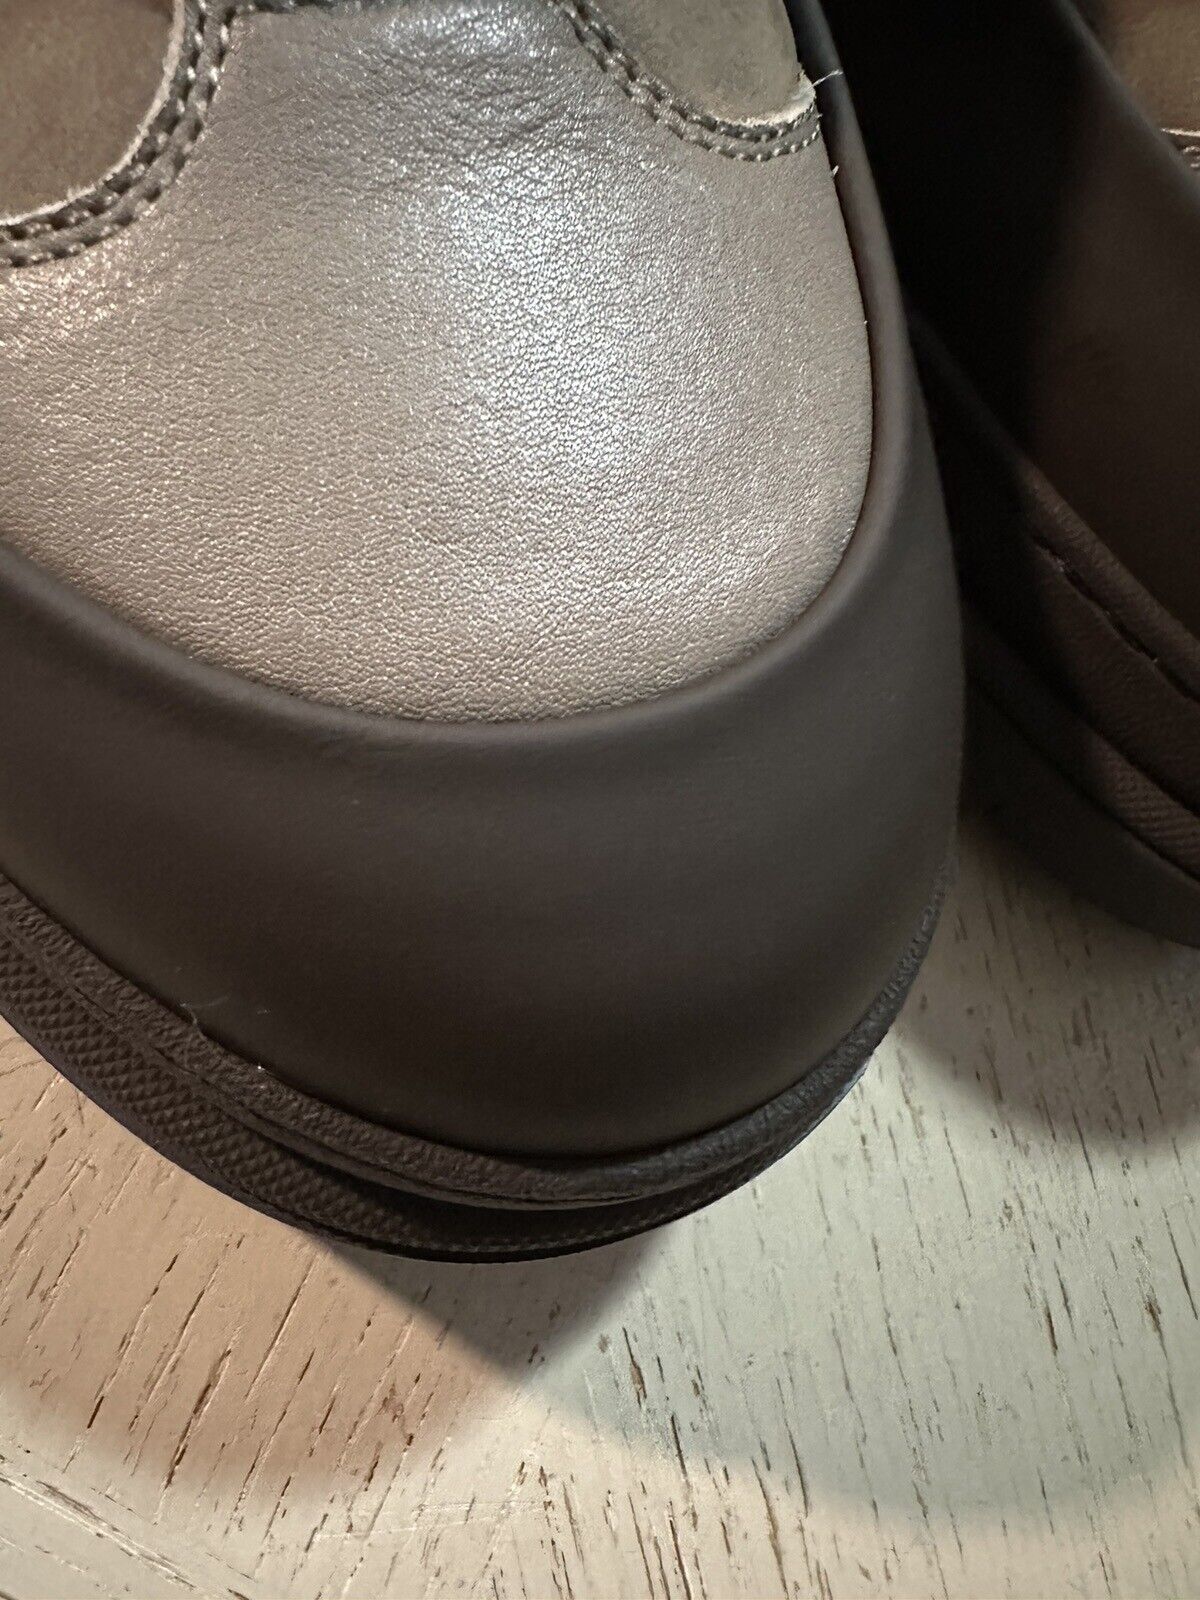 NIB $1295 Brunello Cucinelli Men’s Leather/Suede Shoes Brown/Beige 9 US/42 Eu